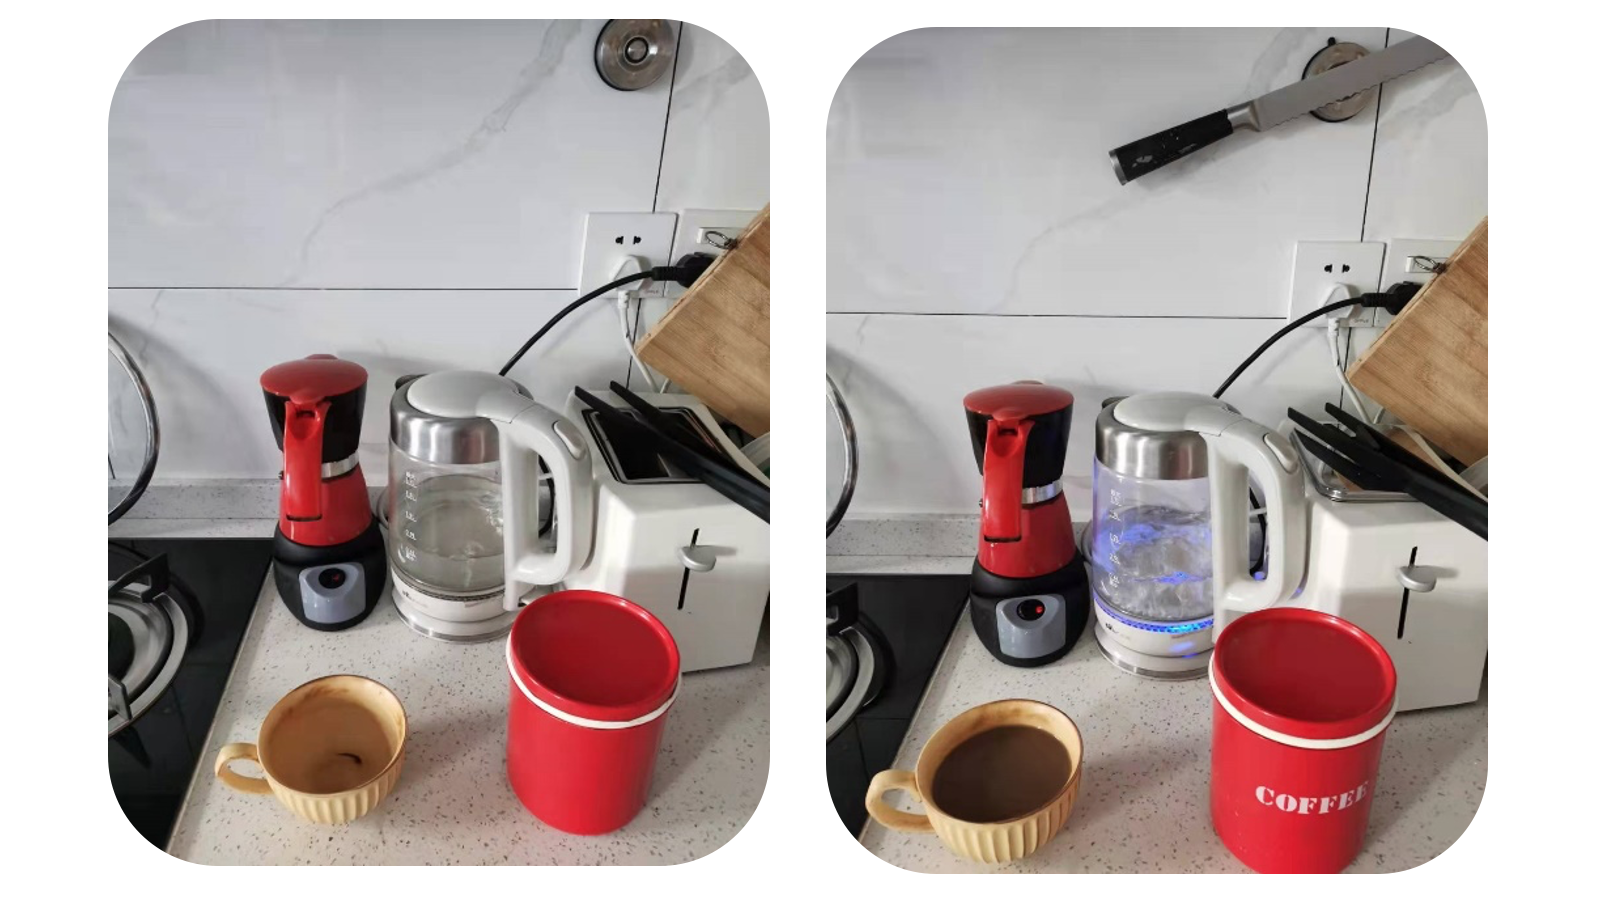 Kitchen worktop with various kitchen items for information gap activity